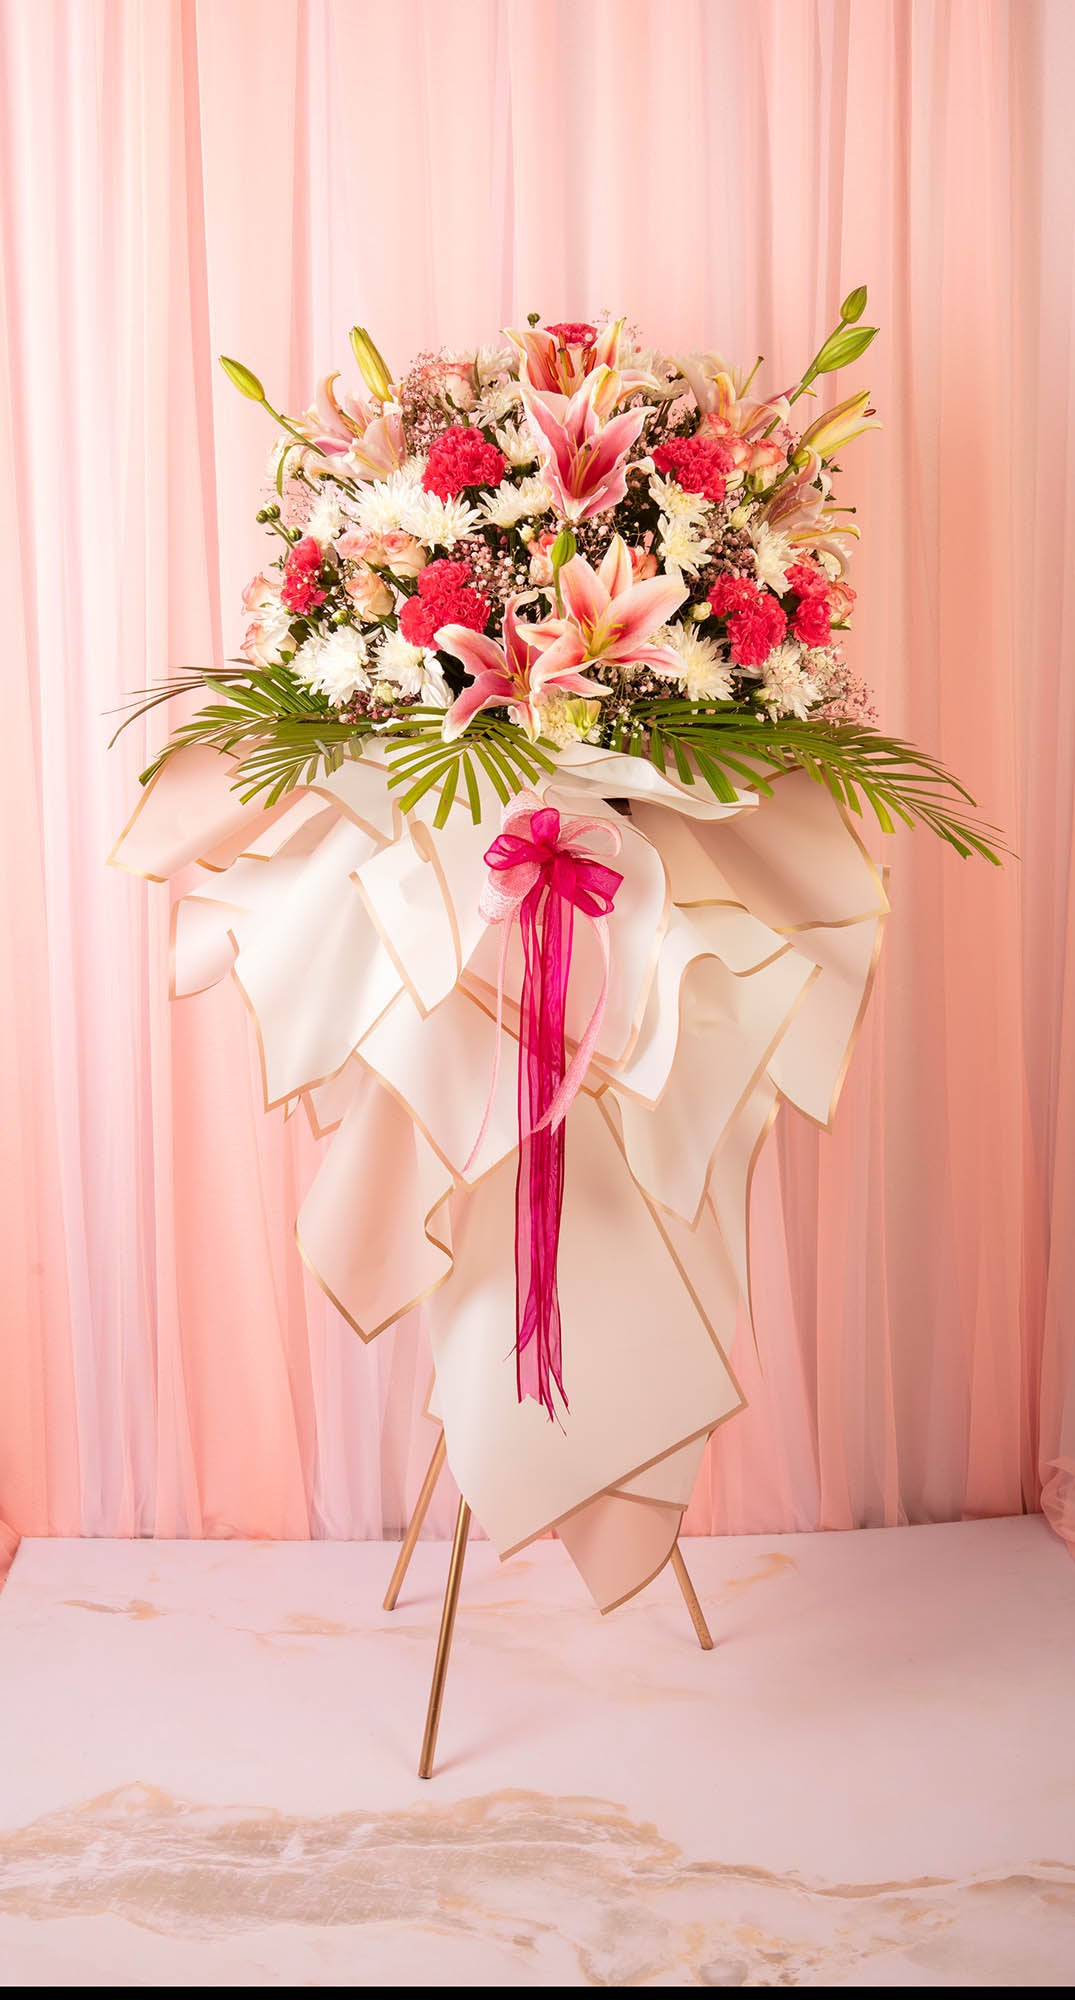 flower bouquet online - floral pedestal